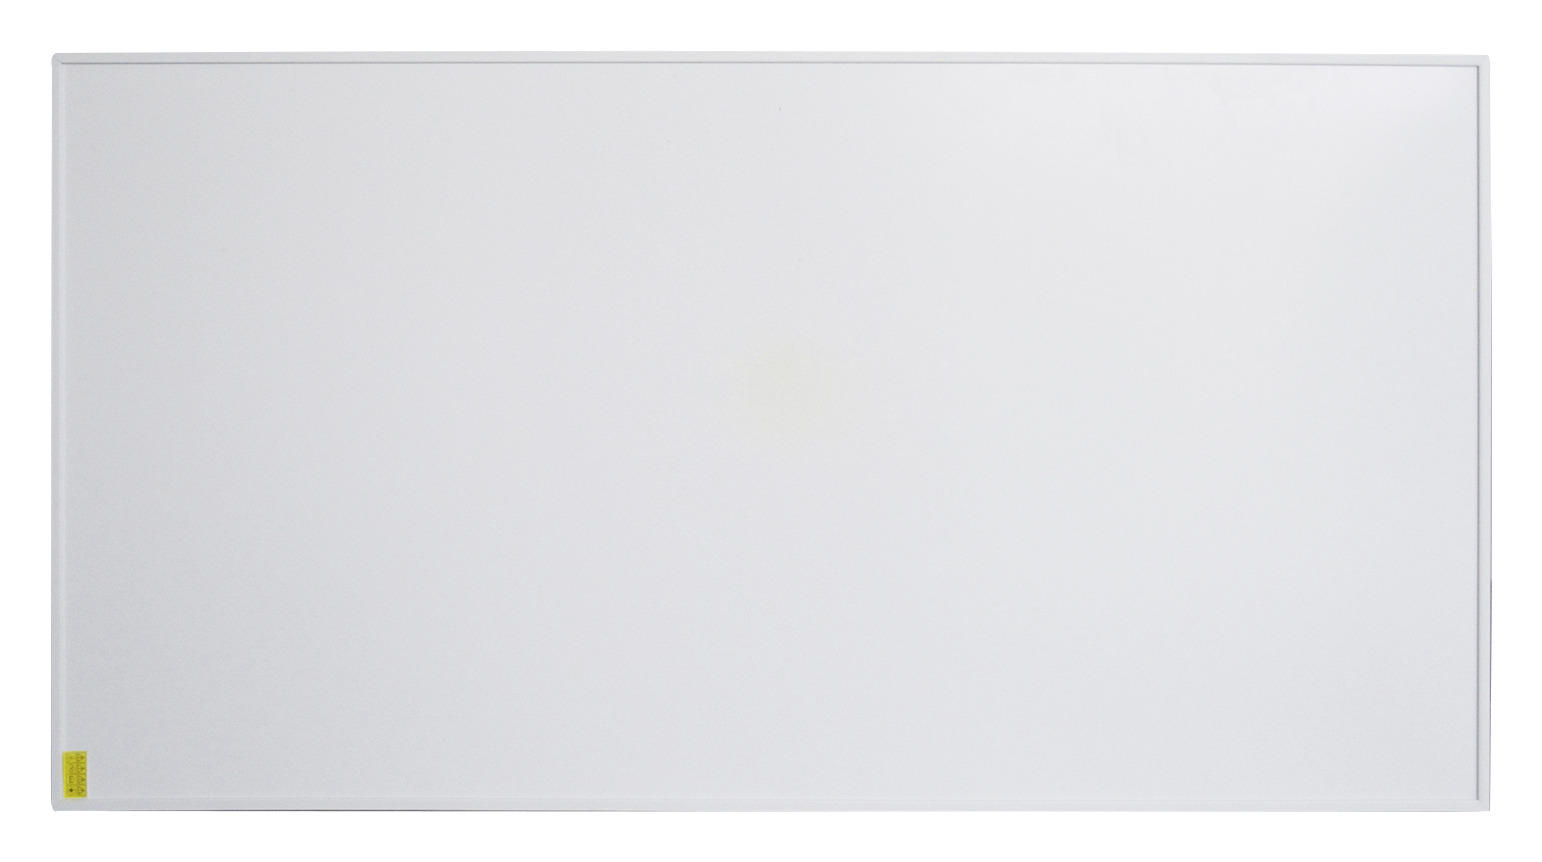 INFRAROT-HEIZPANEEL Ambiente 420 W  - Weiß, Trend, Kunststoff/Metall (70/59,5/2,2cm) - Atrigo